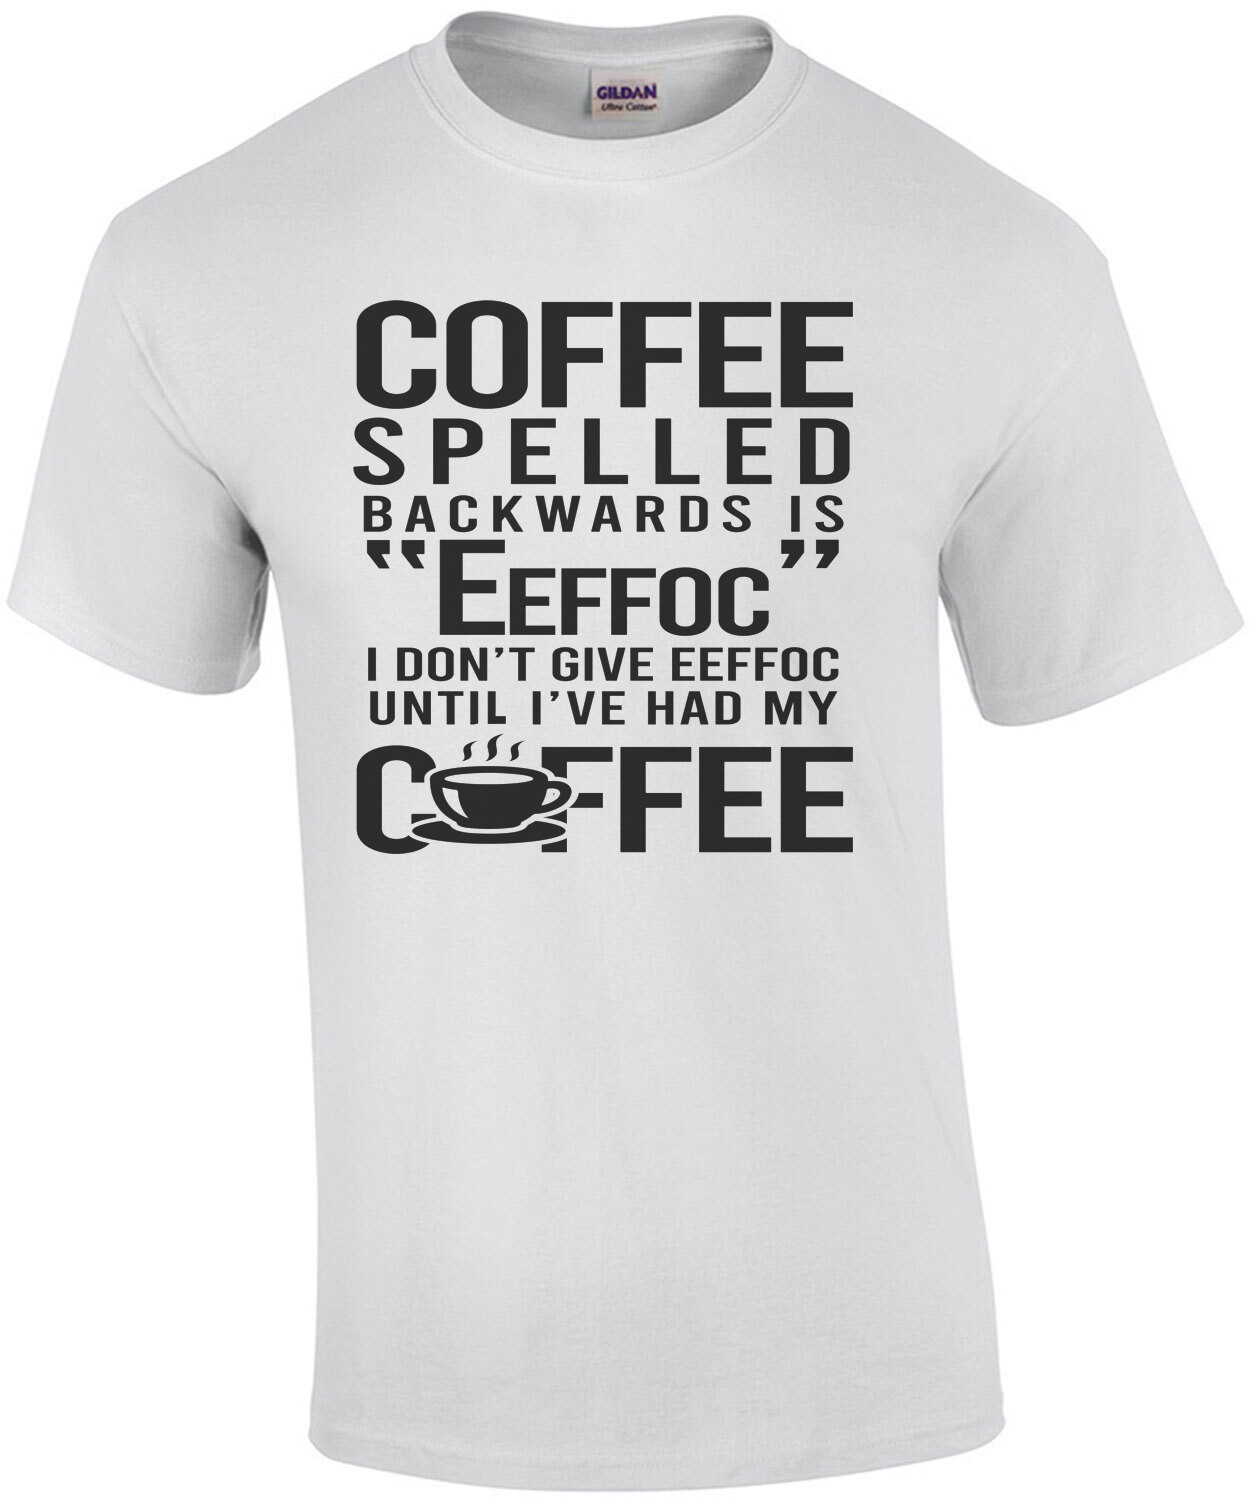 Coffee spelled backwards is "eeffoc" I don't give eefoc until I've had my coffee - funny coffee t-shirt